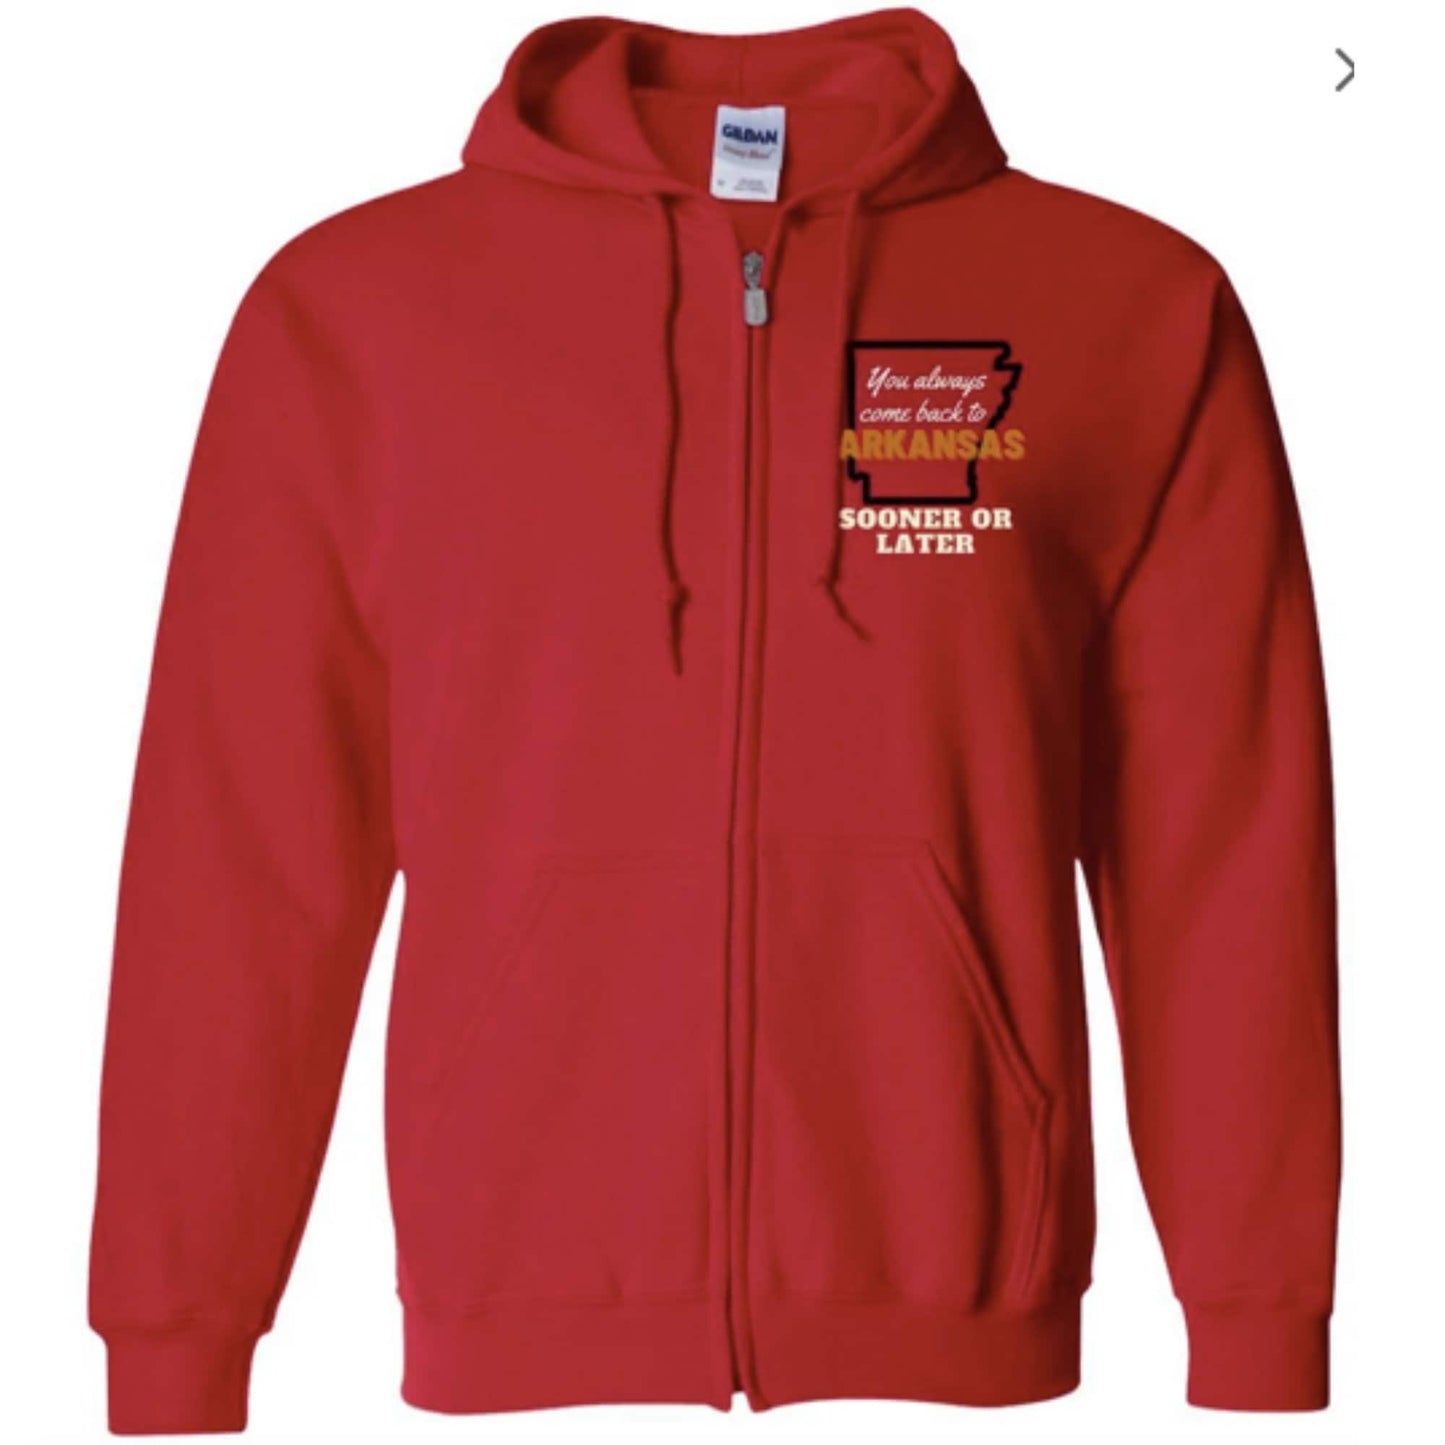 Arkansas Zip Up Hooded Sweatshirt | Arkansas Clothing | GIFTS FOR HIM or her